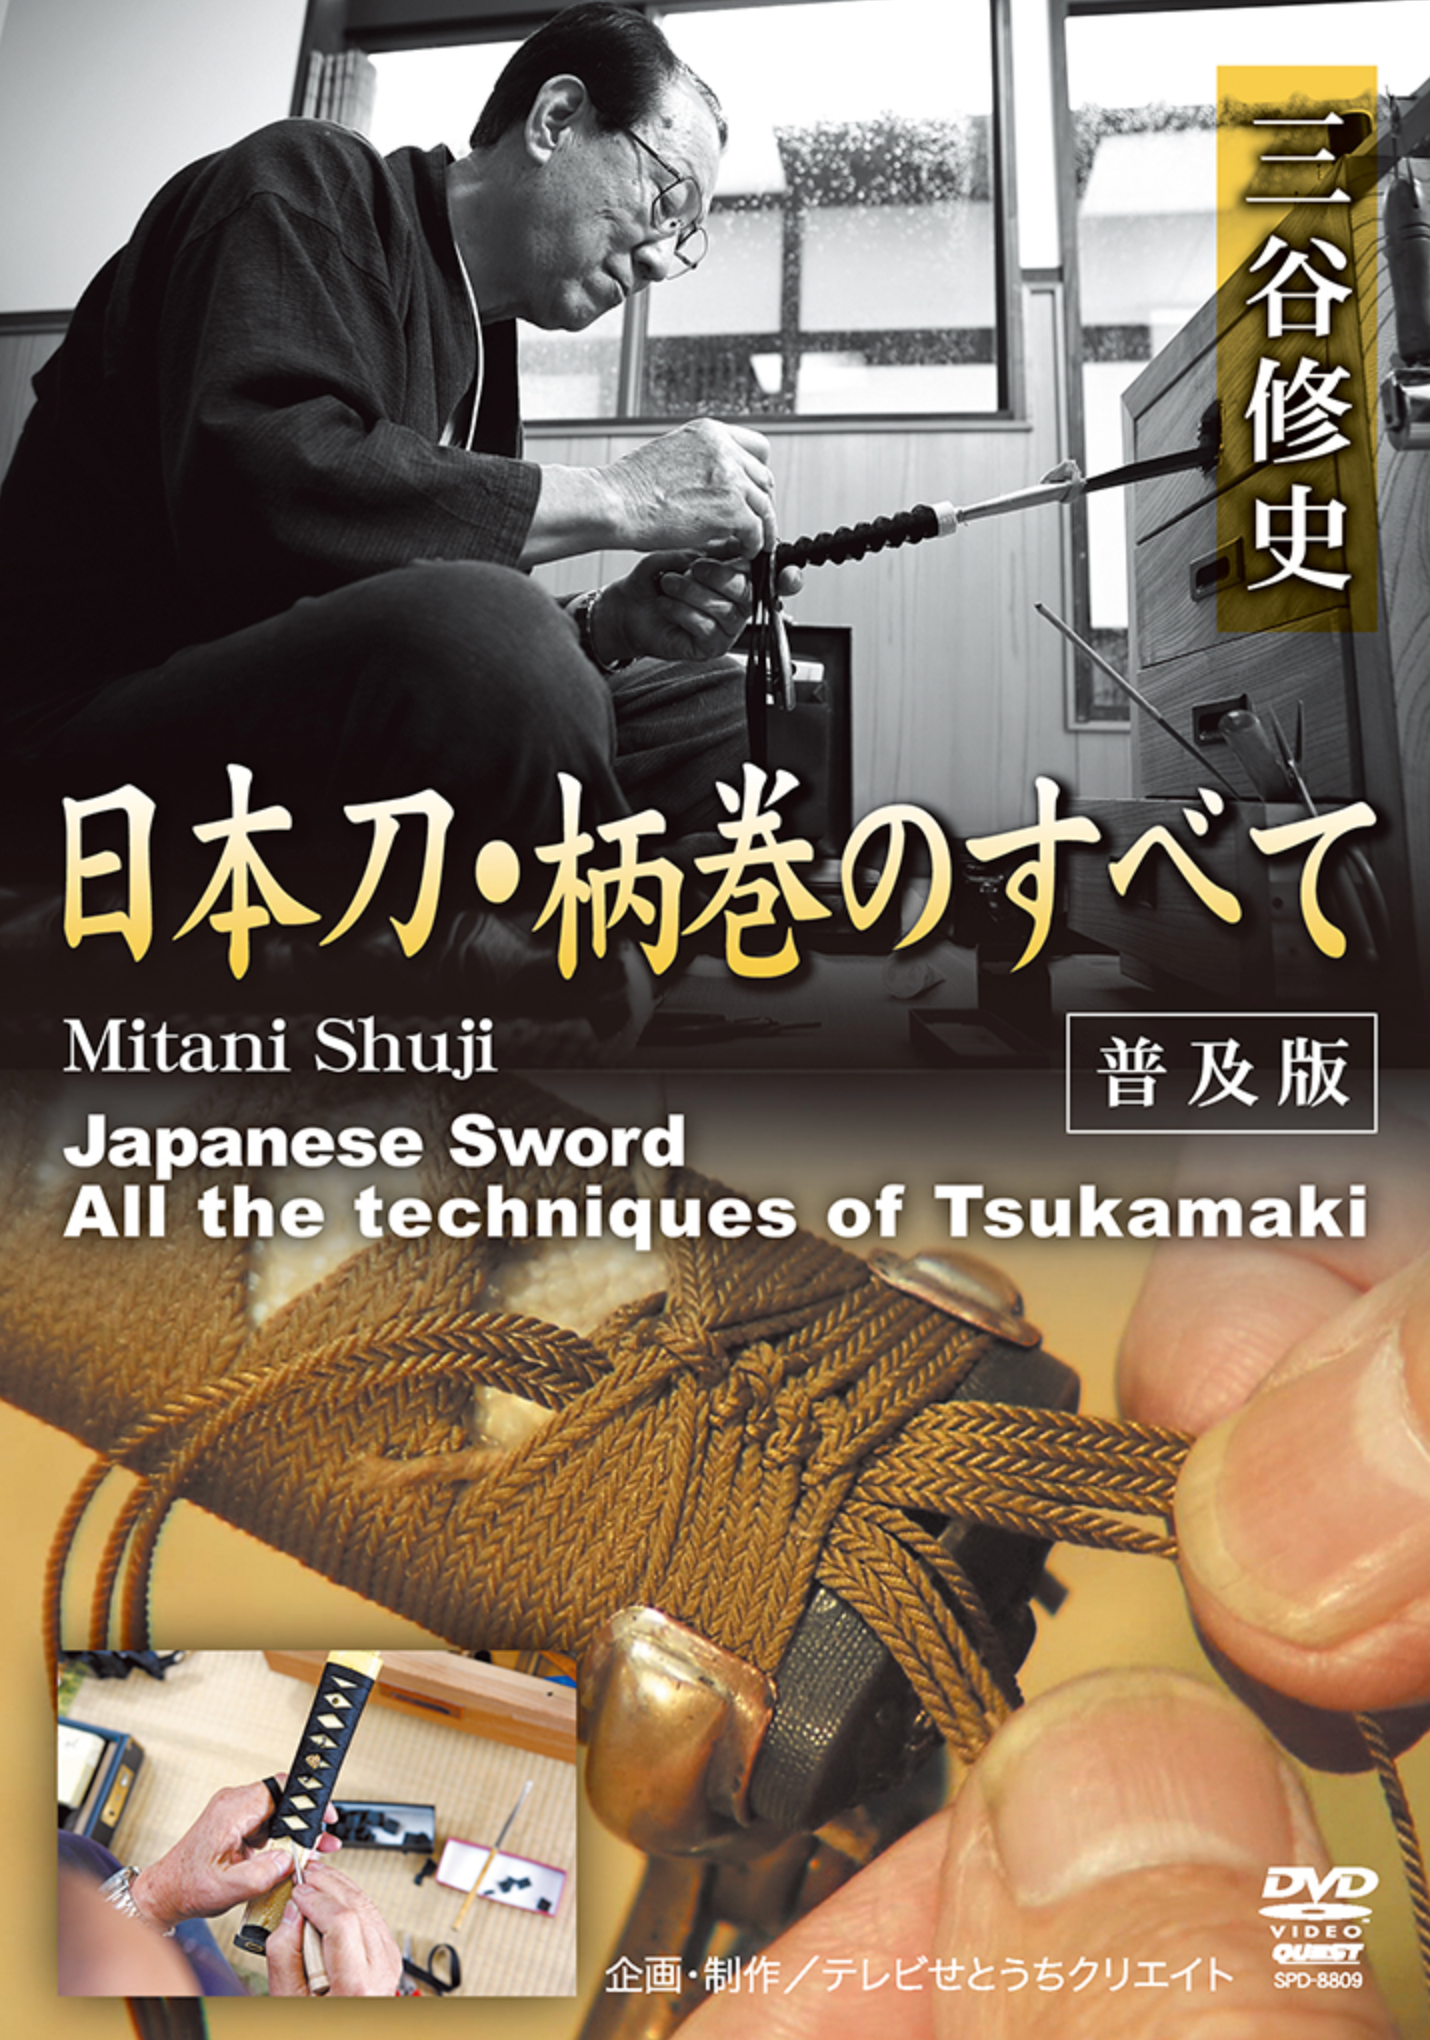 Japanese Sword Tsukamaki Techniques DVD by Mitani Shuji - Budovideos